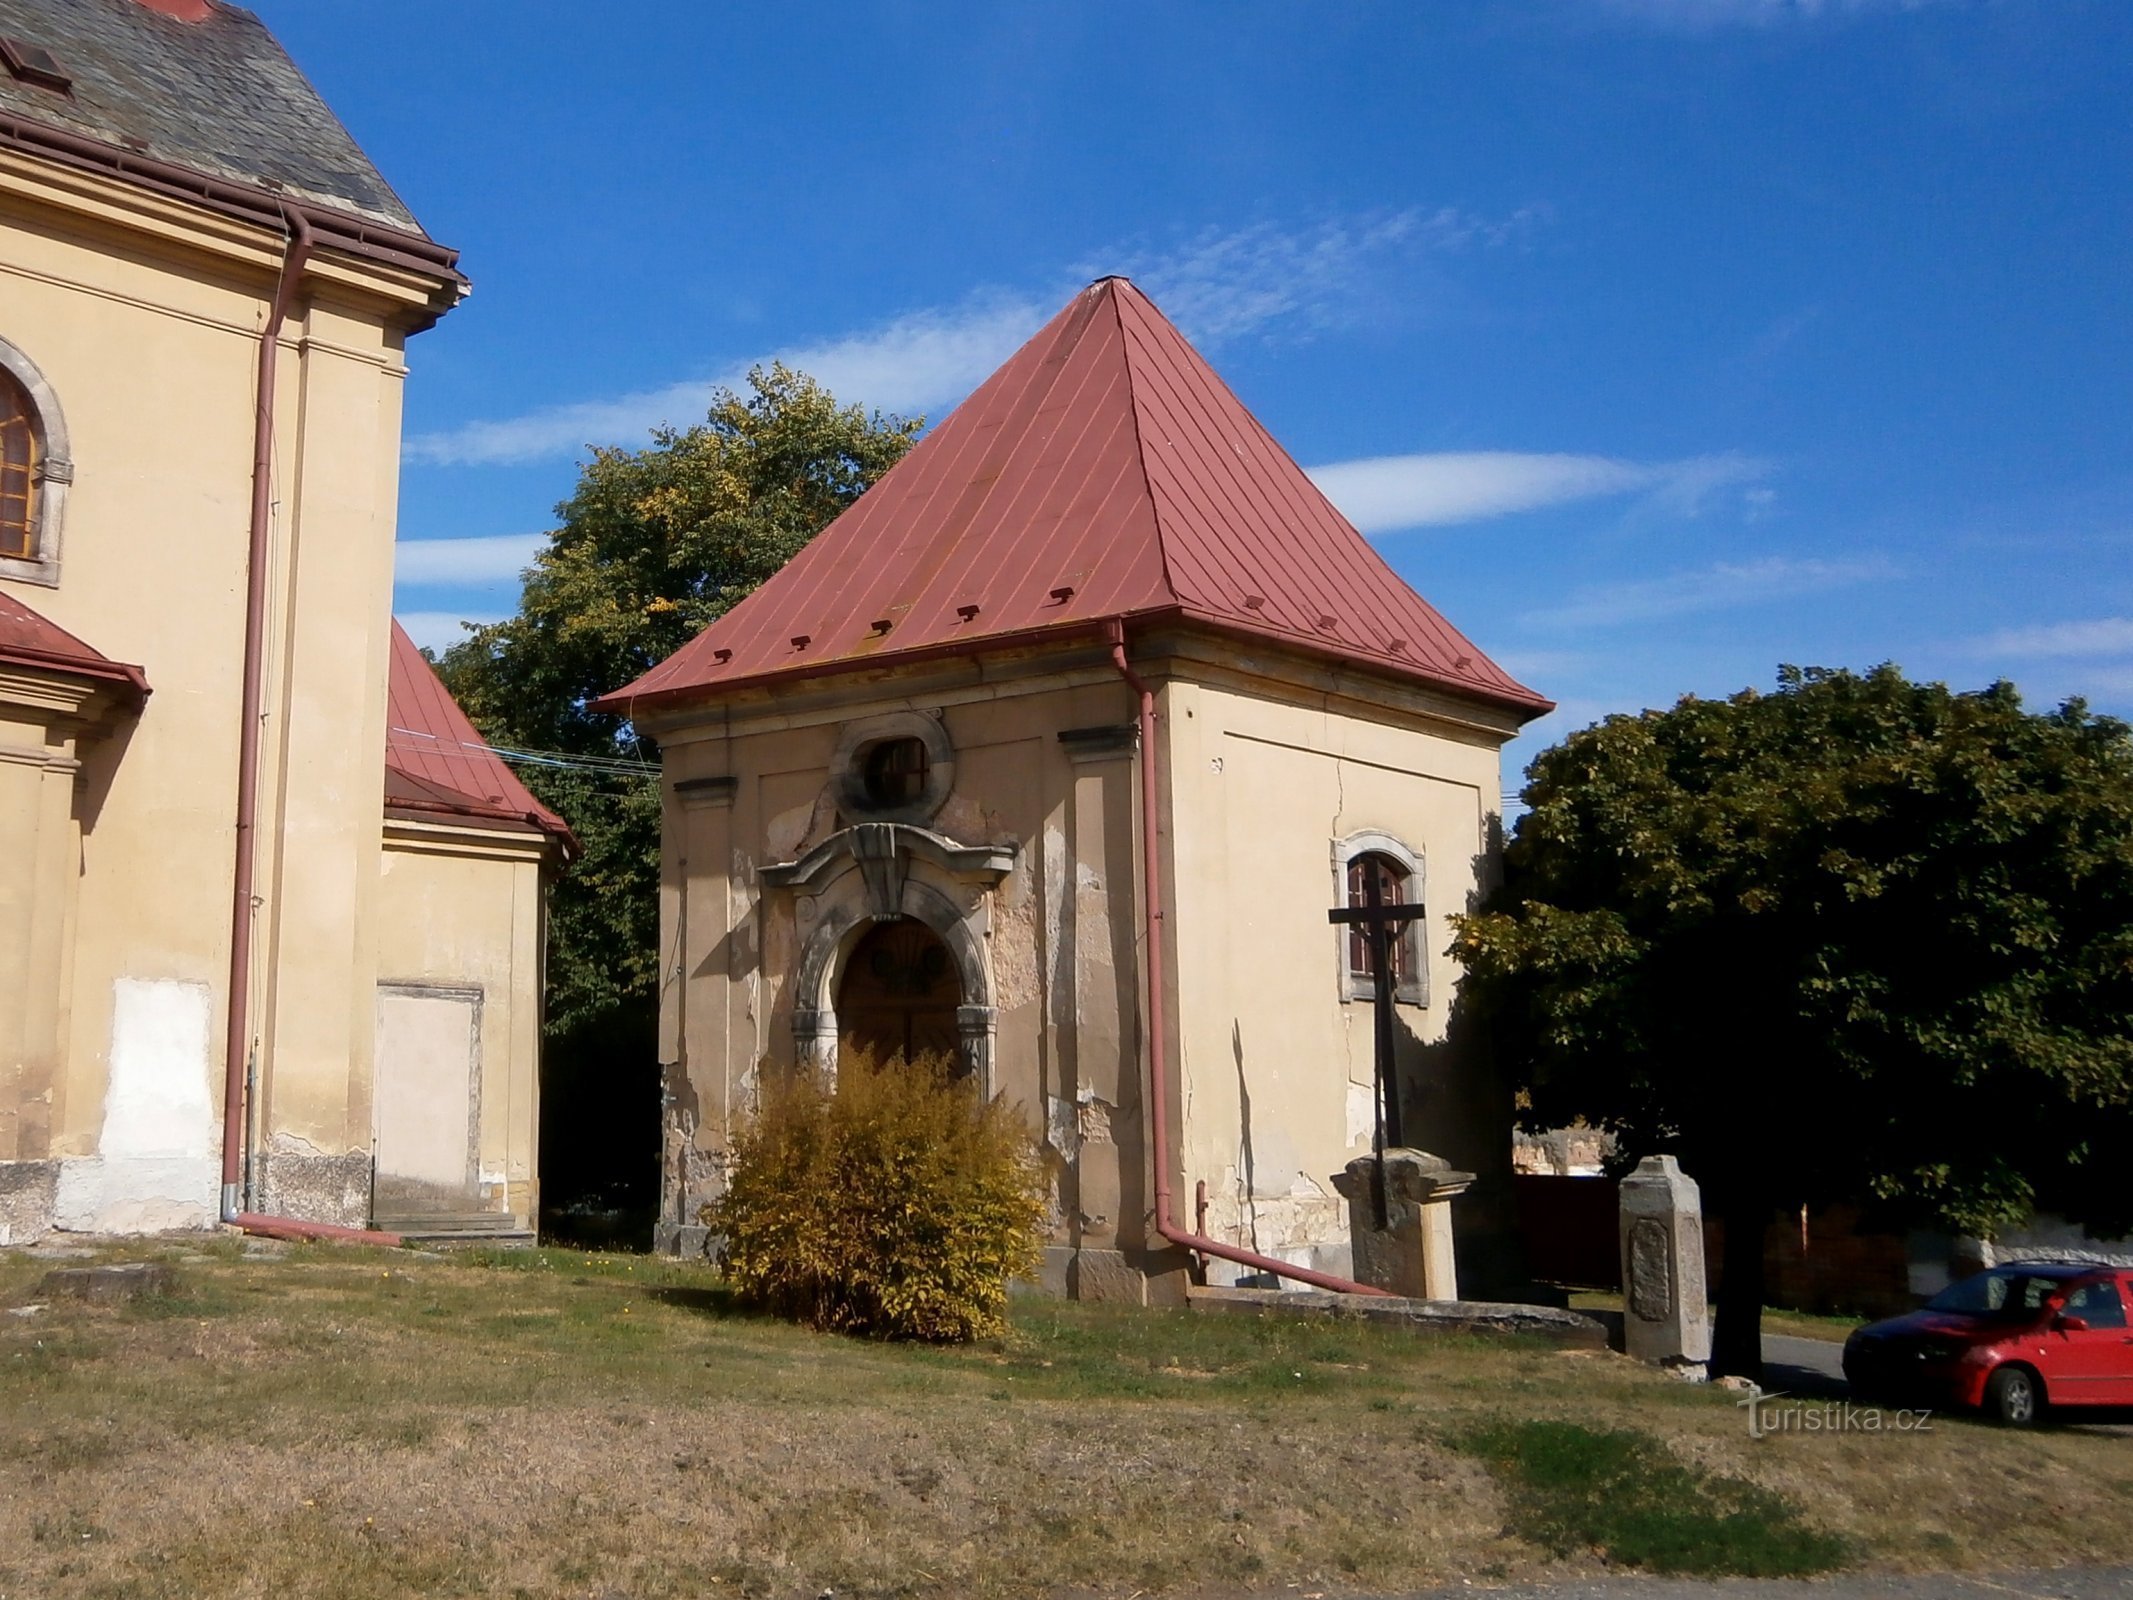 Chapel at the church of St. Jiljí, abbot (Chvalkovice)